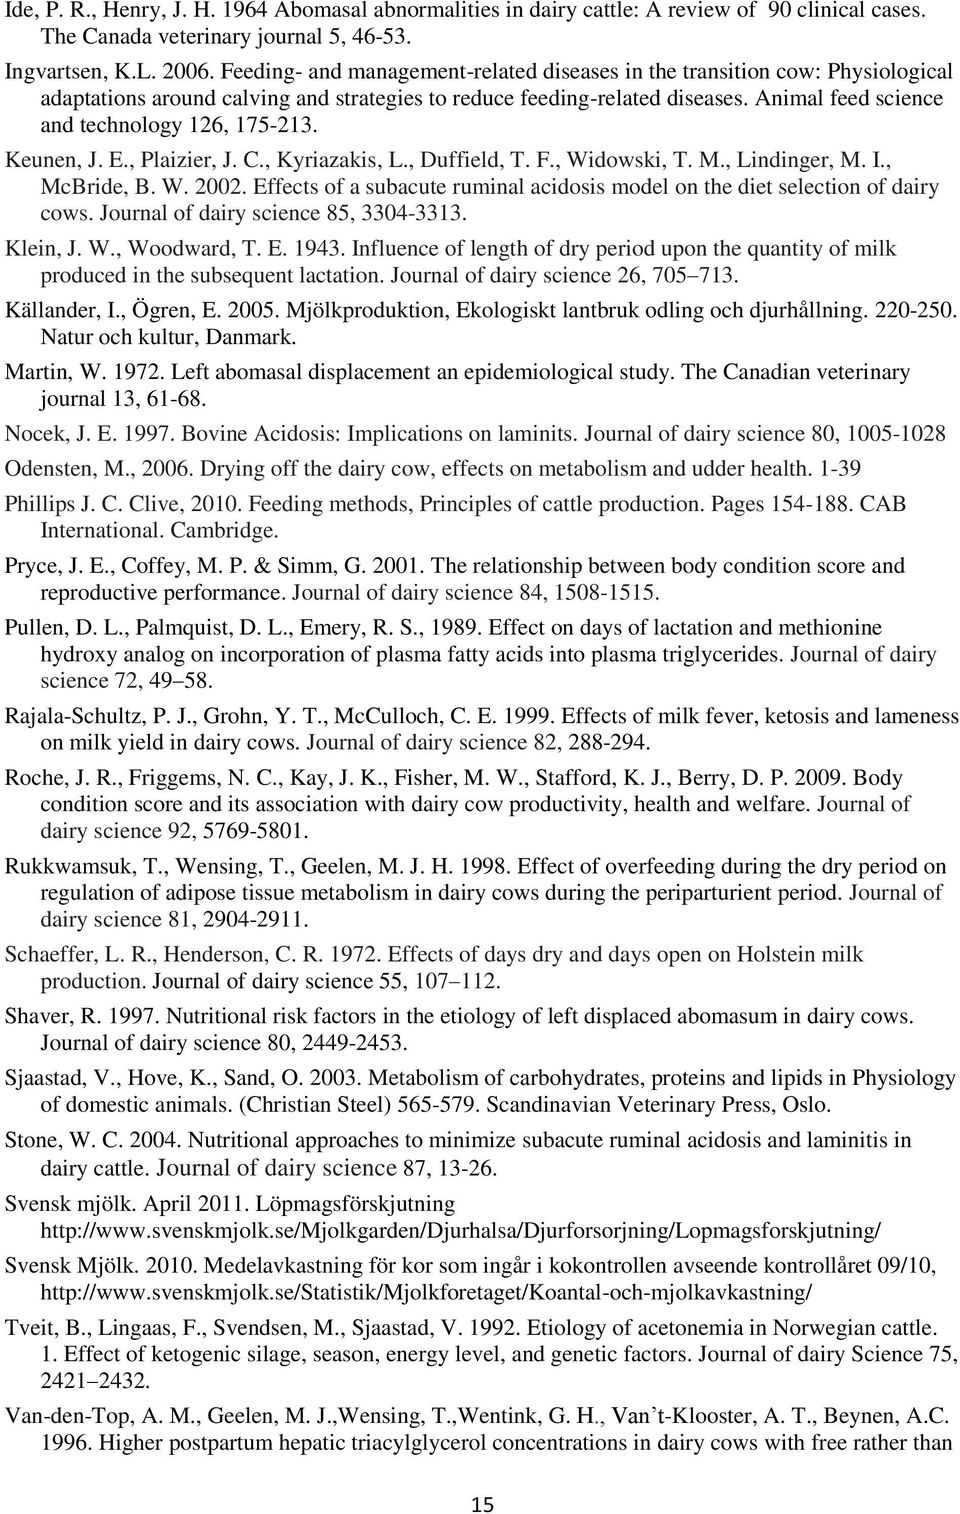 Animal feed science and technology 126, 175-213. Keunen, J. E., Plaizier, J. C., Kyriazakis, L., Duffield, T. F., Widowski, T. M., Lindinger, M. I., McBride, B. W. 2002.